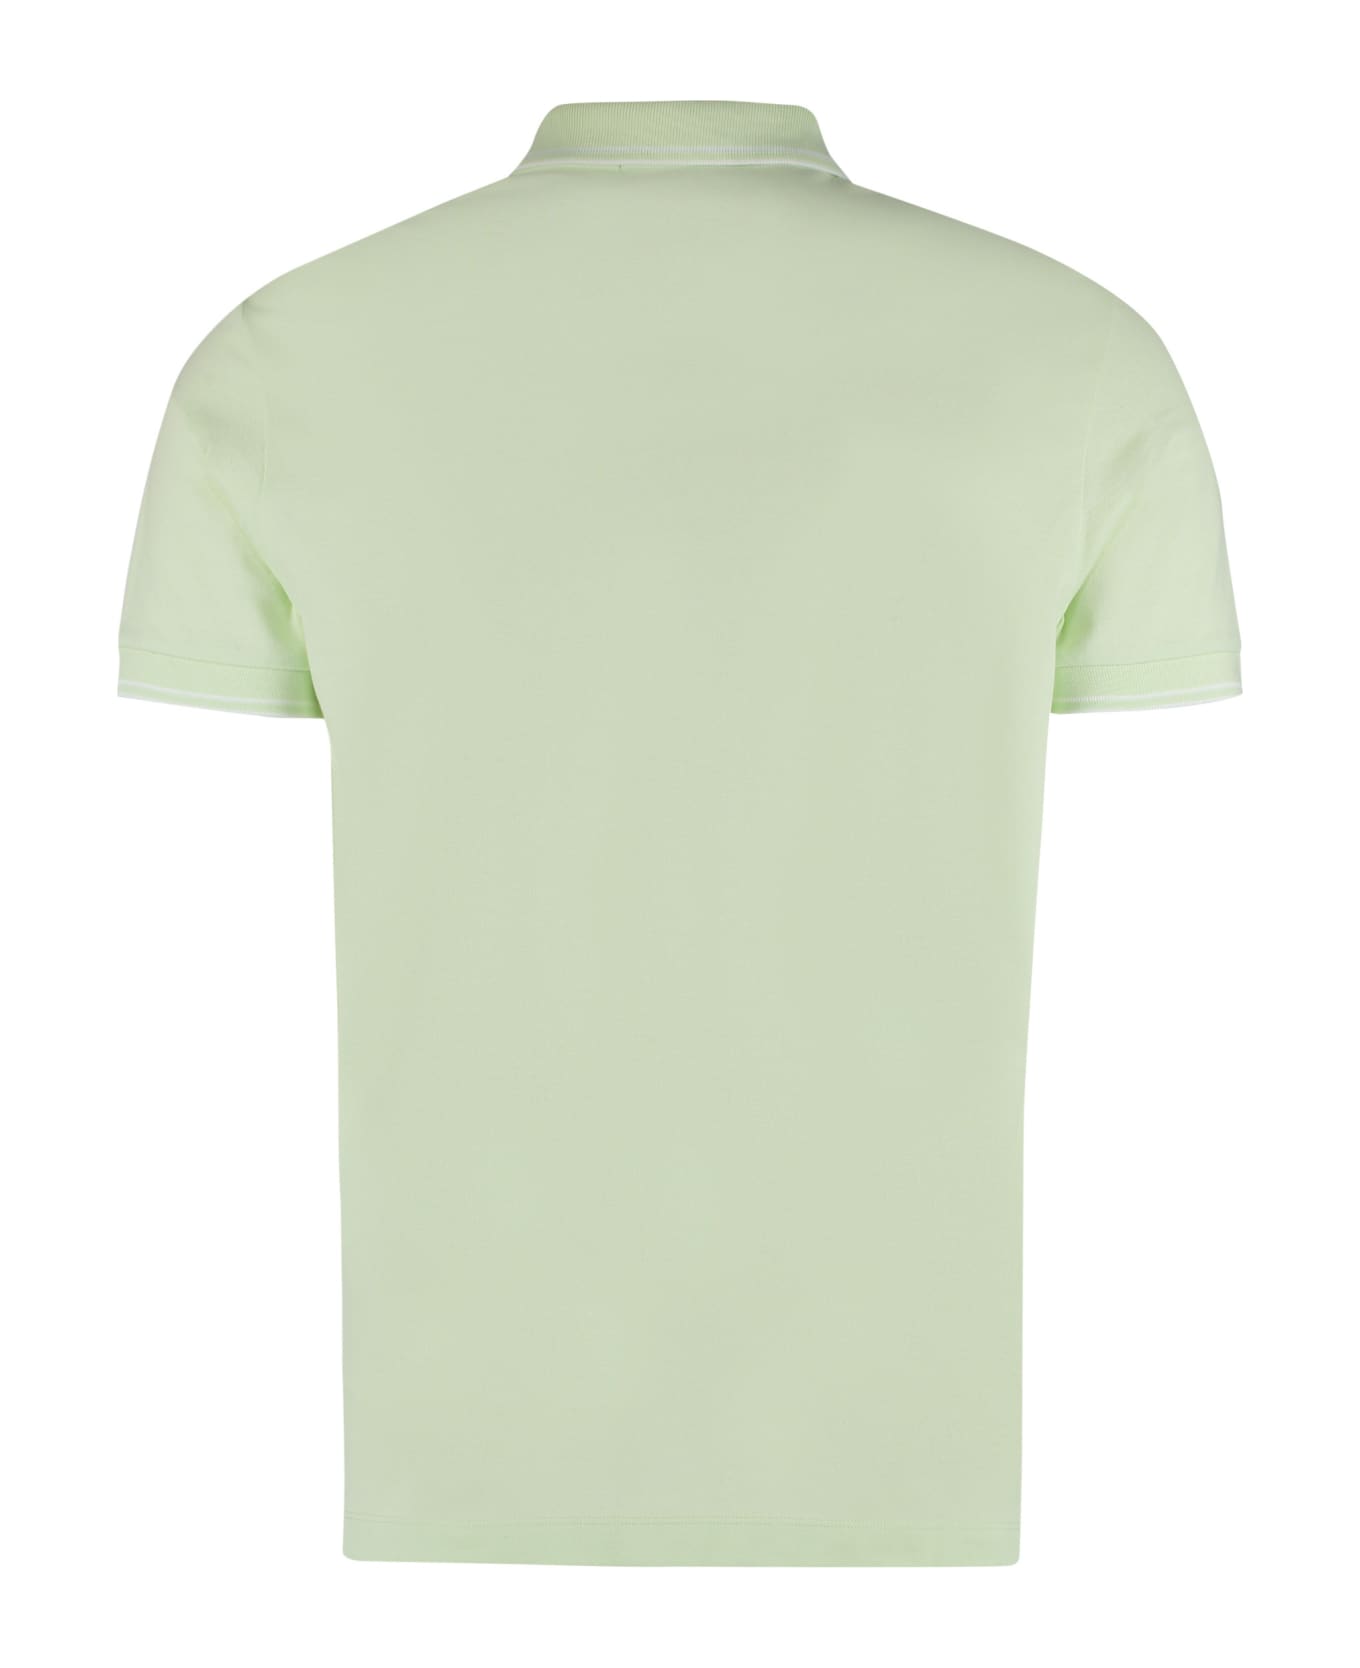 Stone Island Cotton Polo Shirt - green